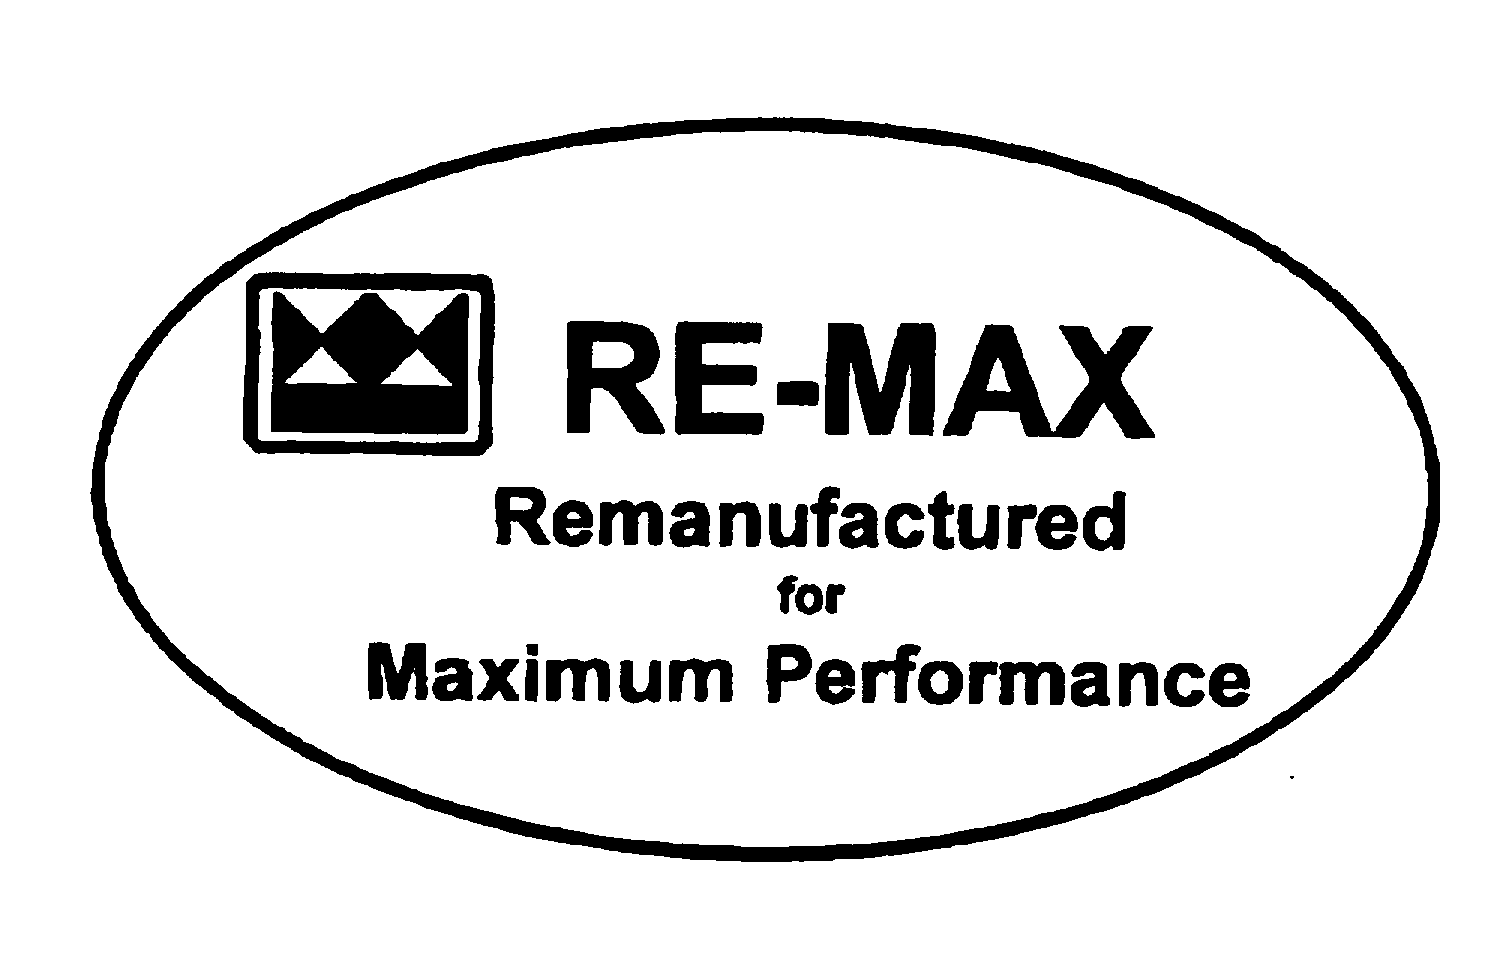  RE-MAX REMANUFACTURED FOR MAXIMUM PERFORMANCE